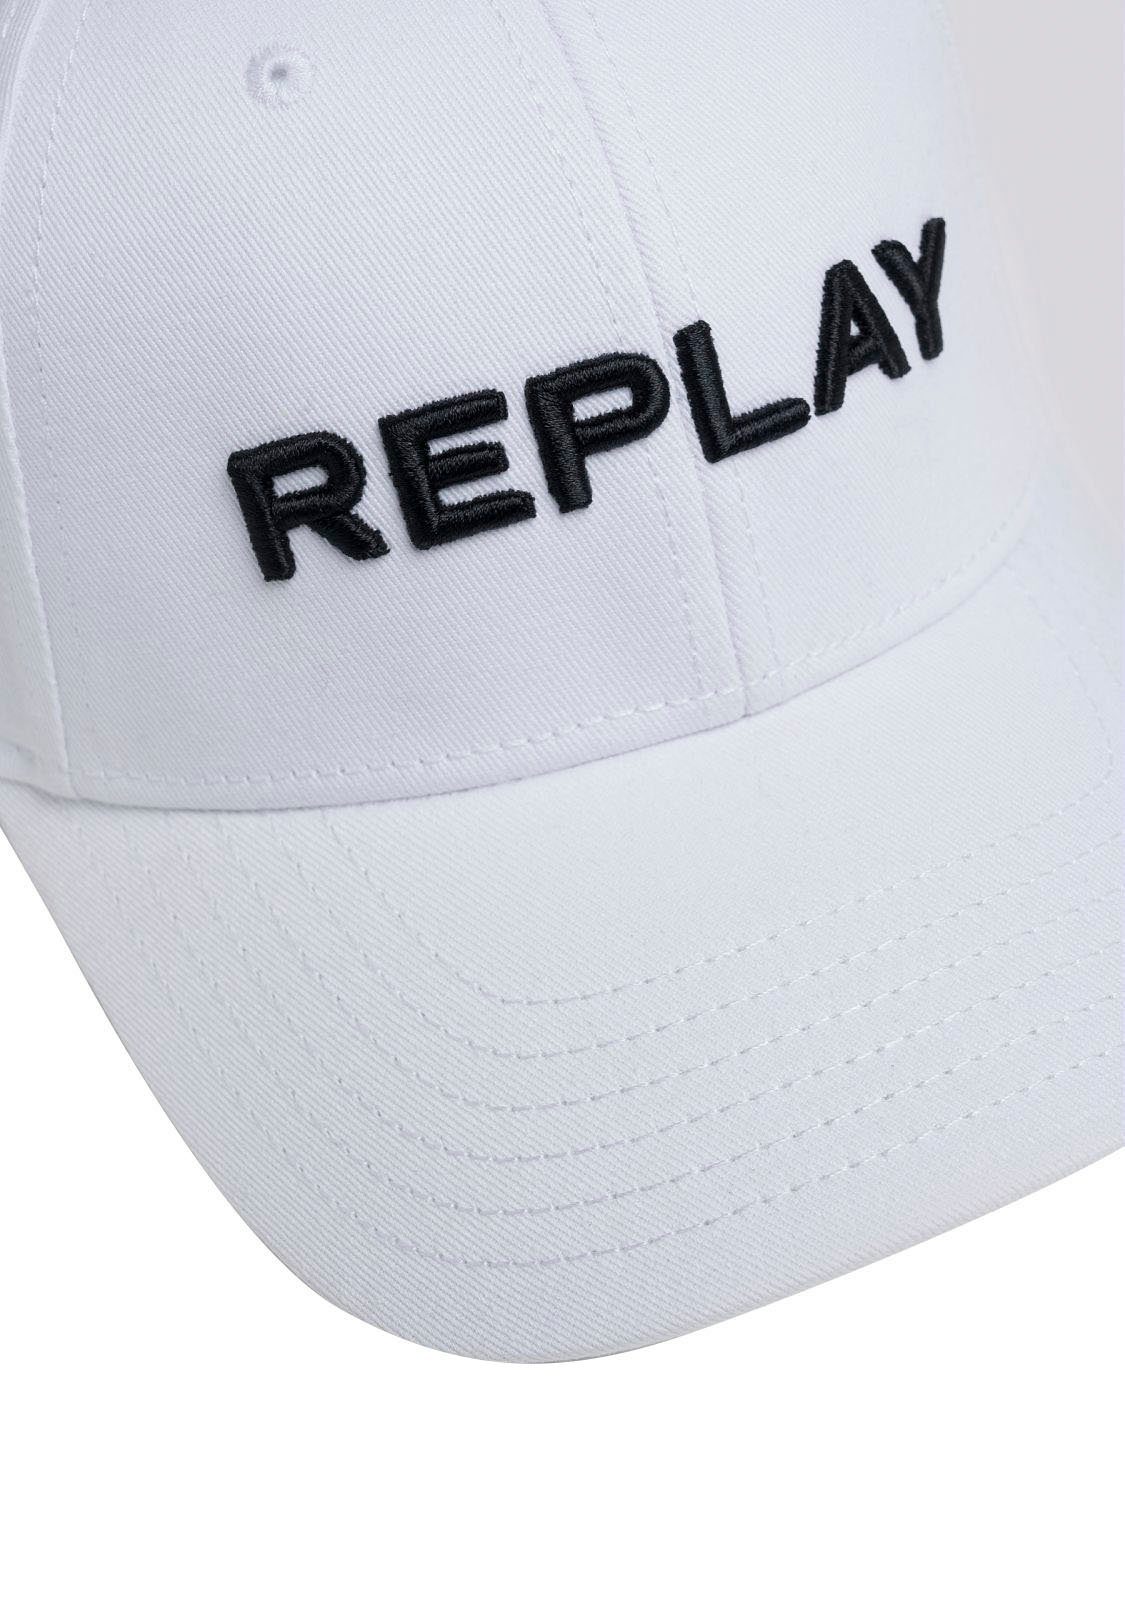 Replay Baseball Cap COMPONENTE Logo-Stickerei mit optical whit NATURALE